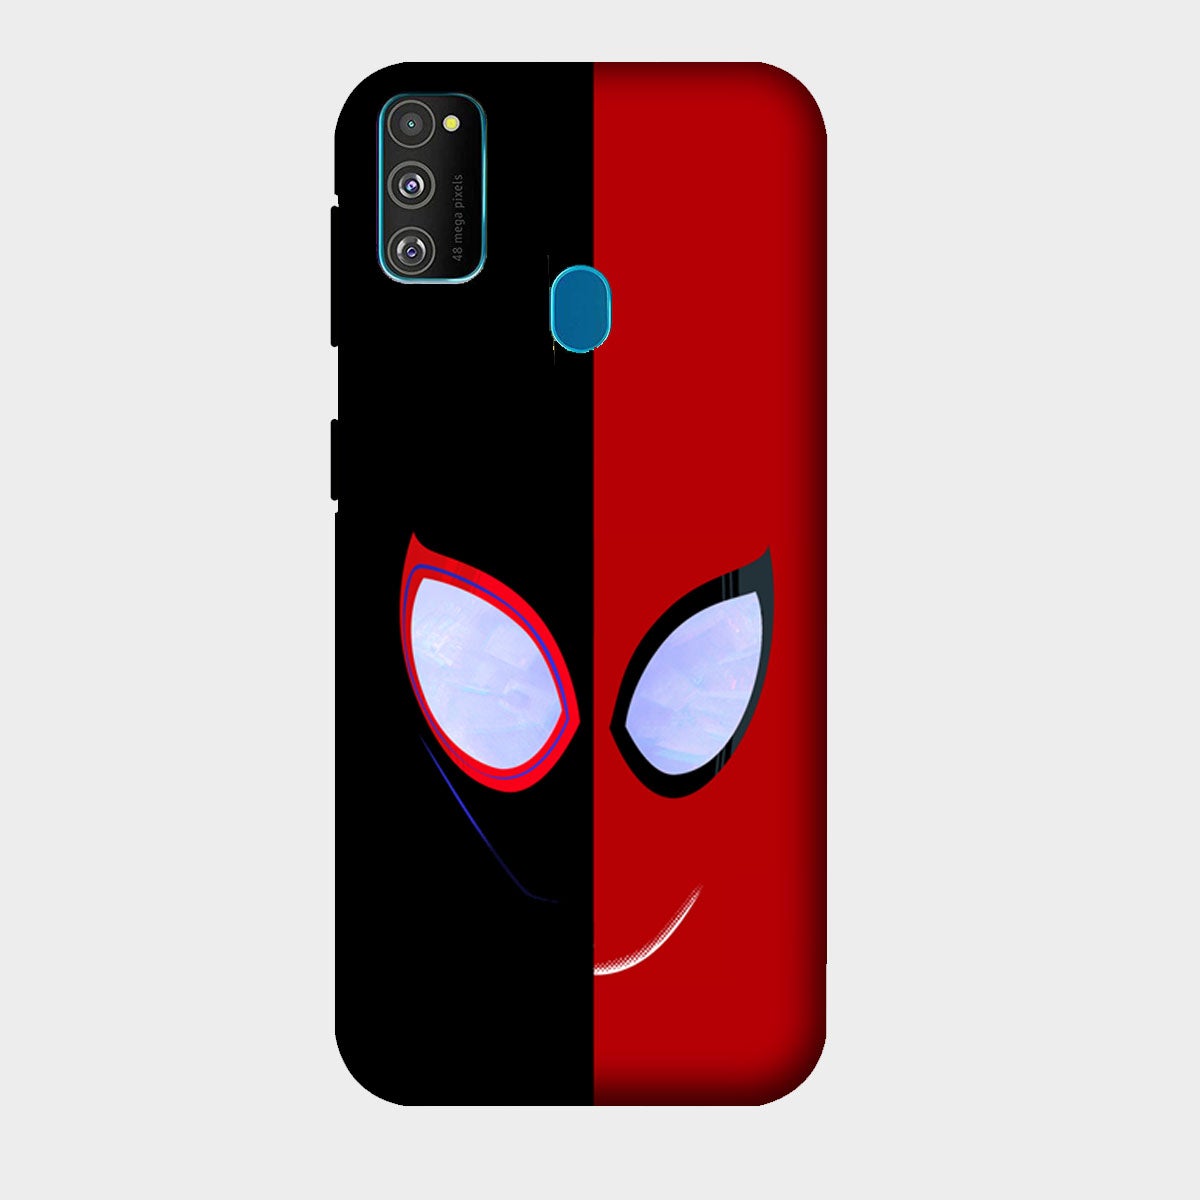 Spider Man - Black & Red - Mobile Phone Cover - Hard Case - Samsung - Samsung